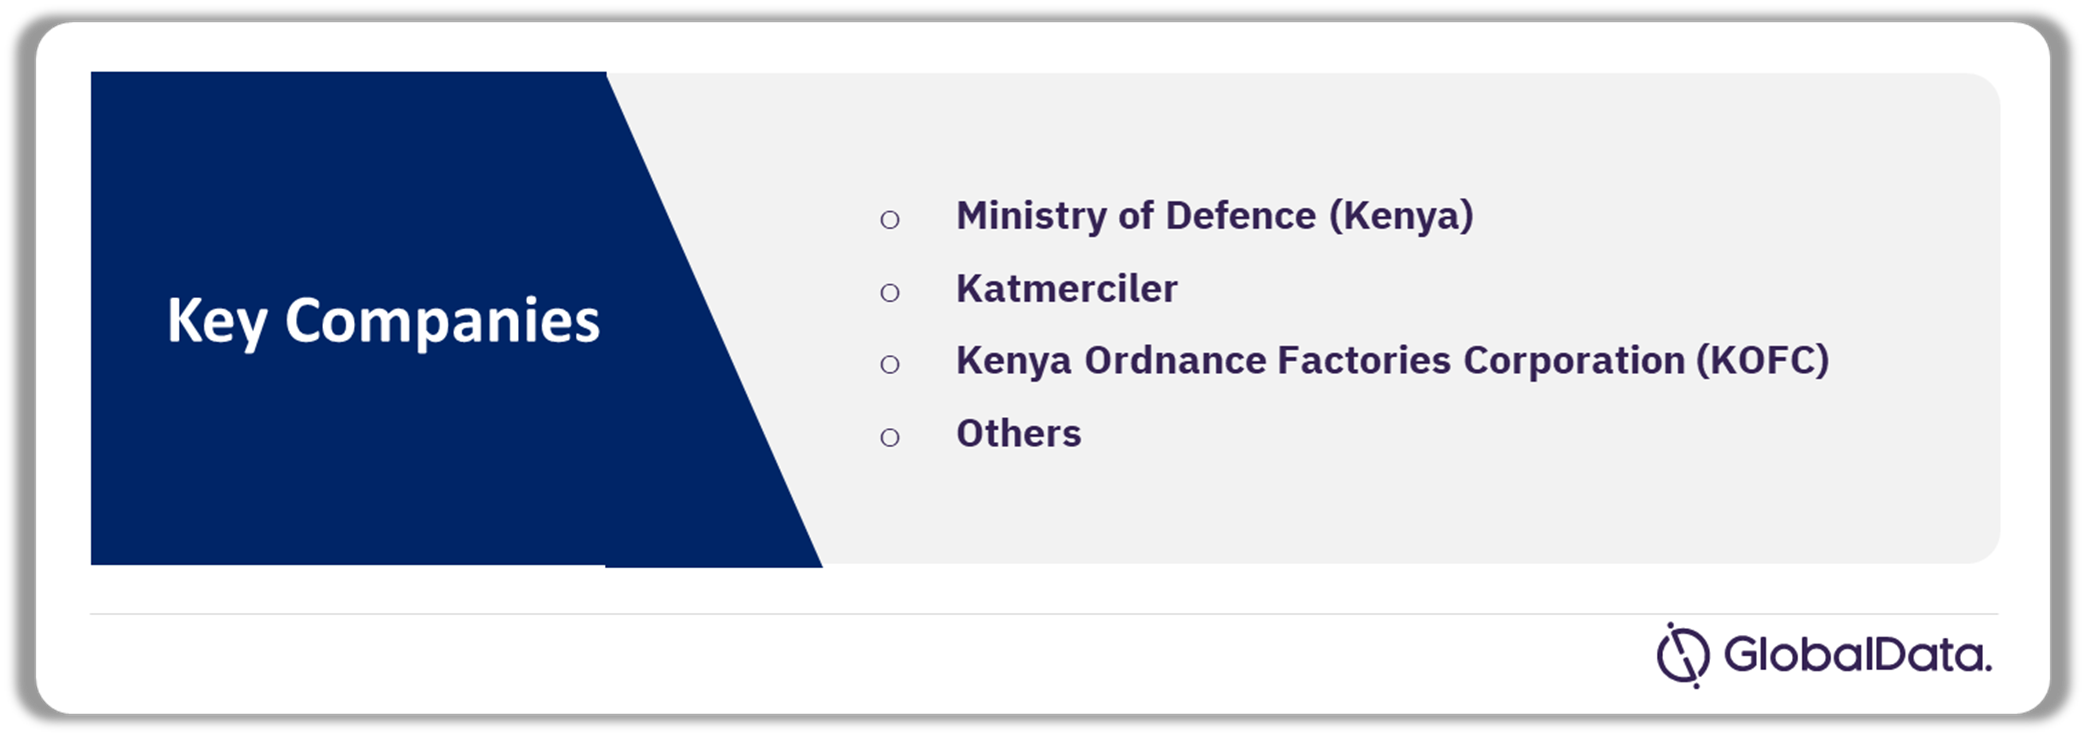 Kenya Defense Market Analysis by Companies